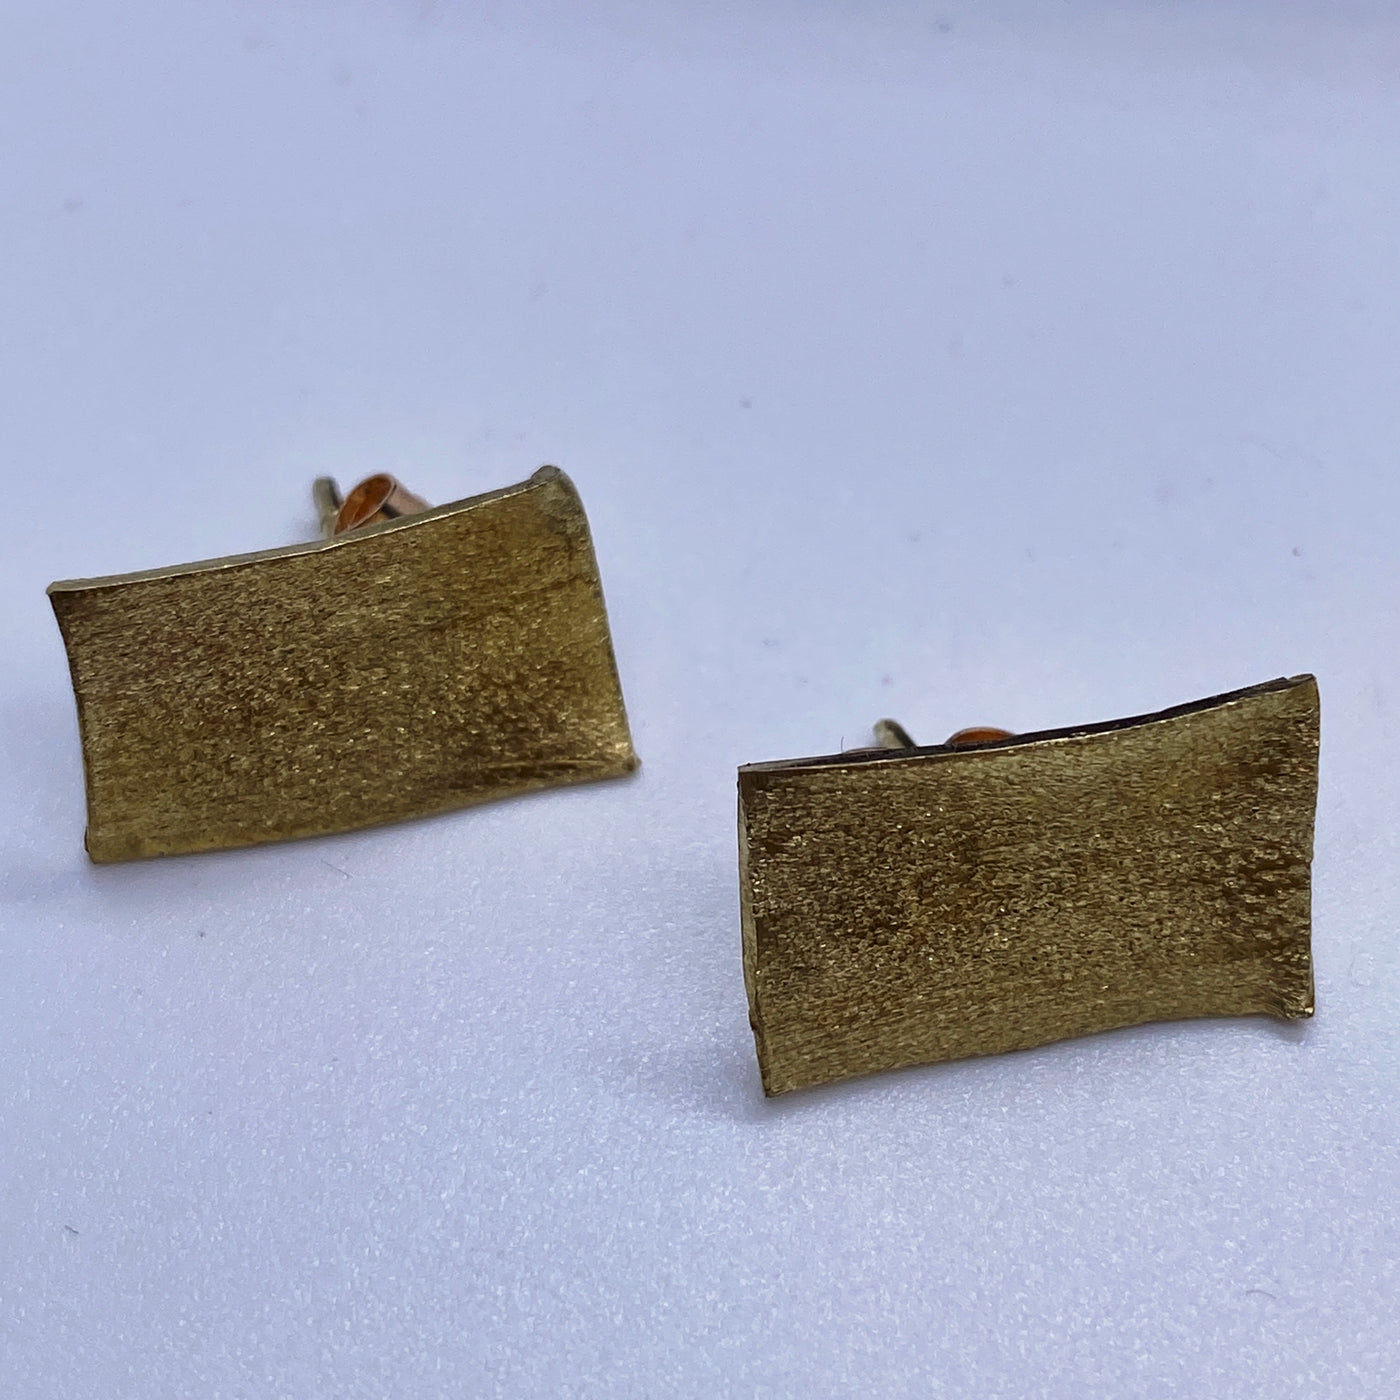 Rectangular yellow brass studs 2x1 cm texturized